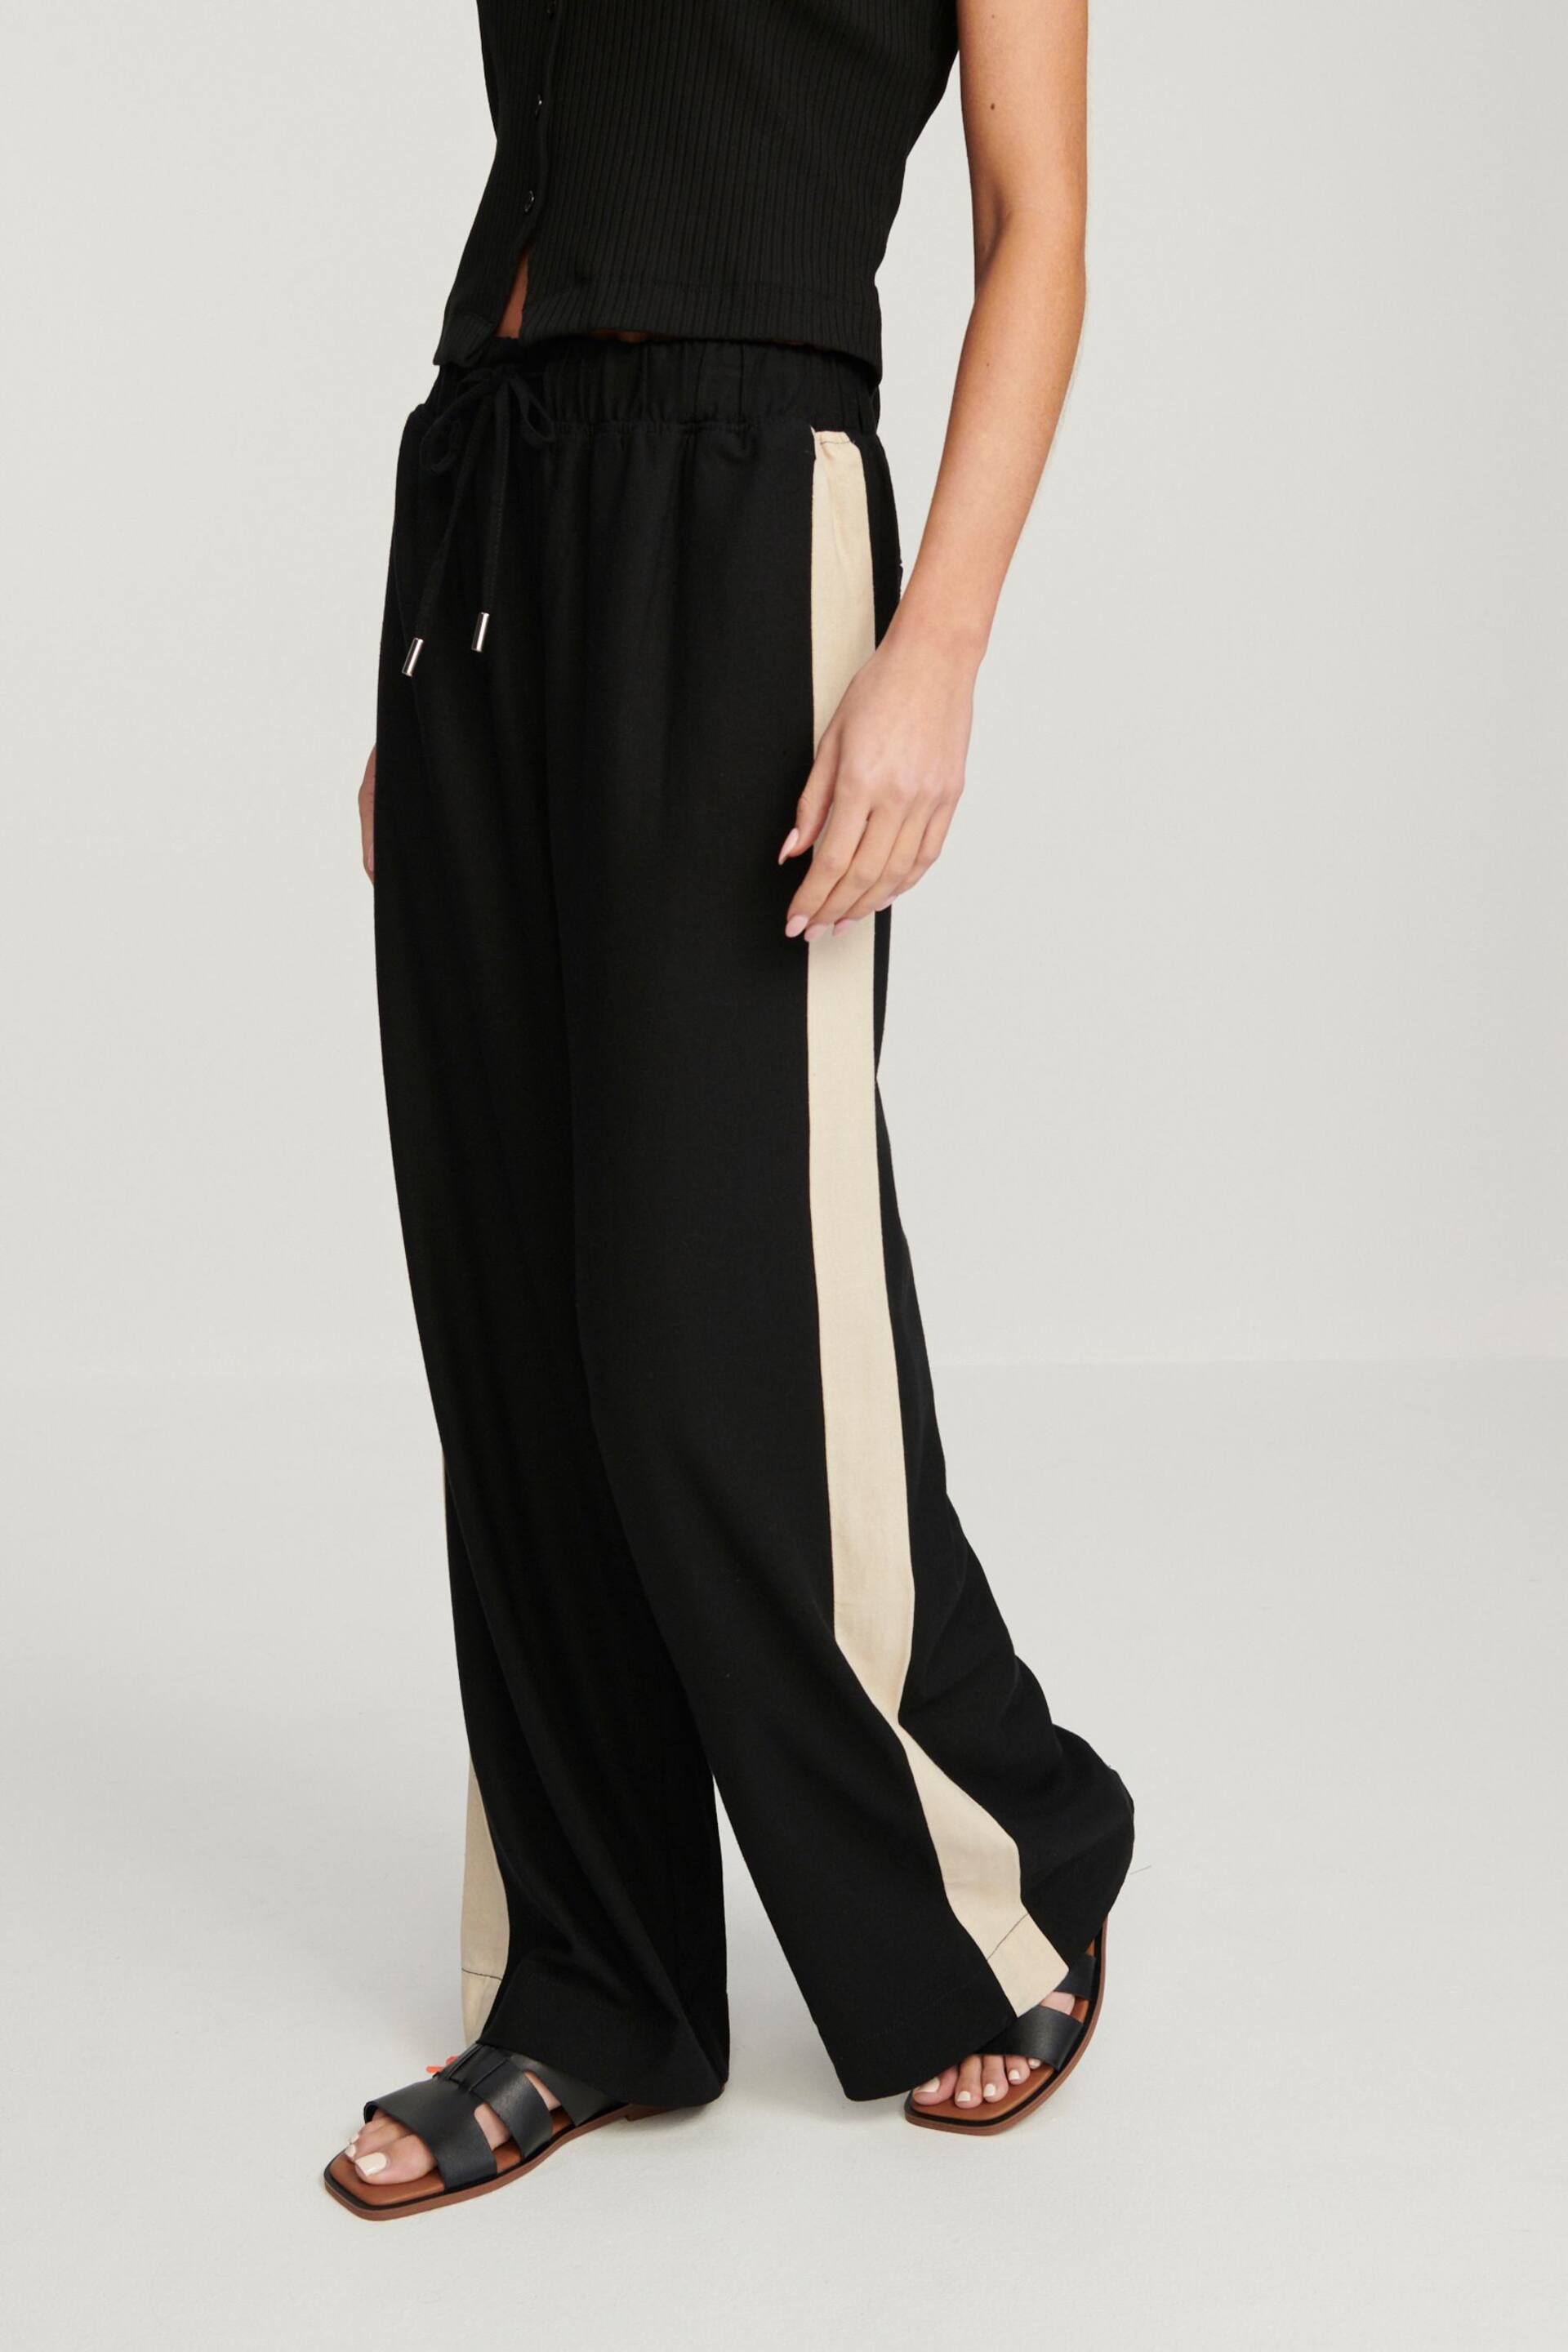 Black/Ecru Cream Linen Blend Side Stripe Track Trousers - Image 2 of 7